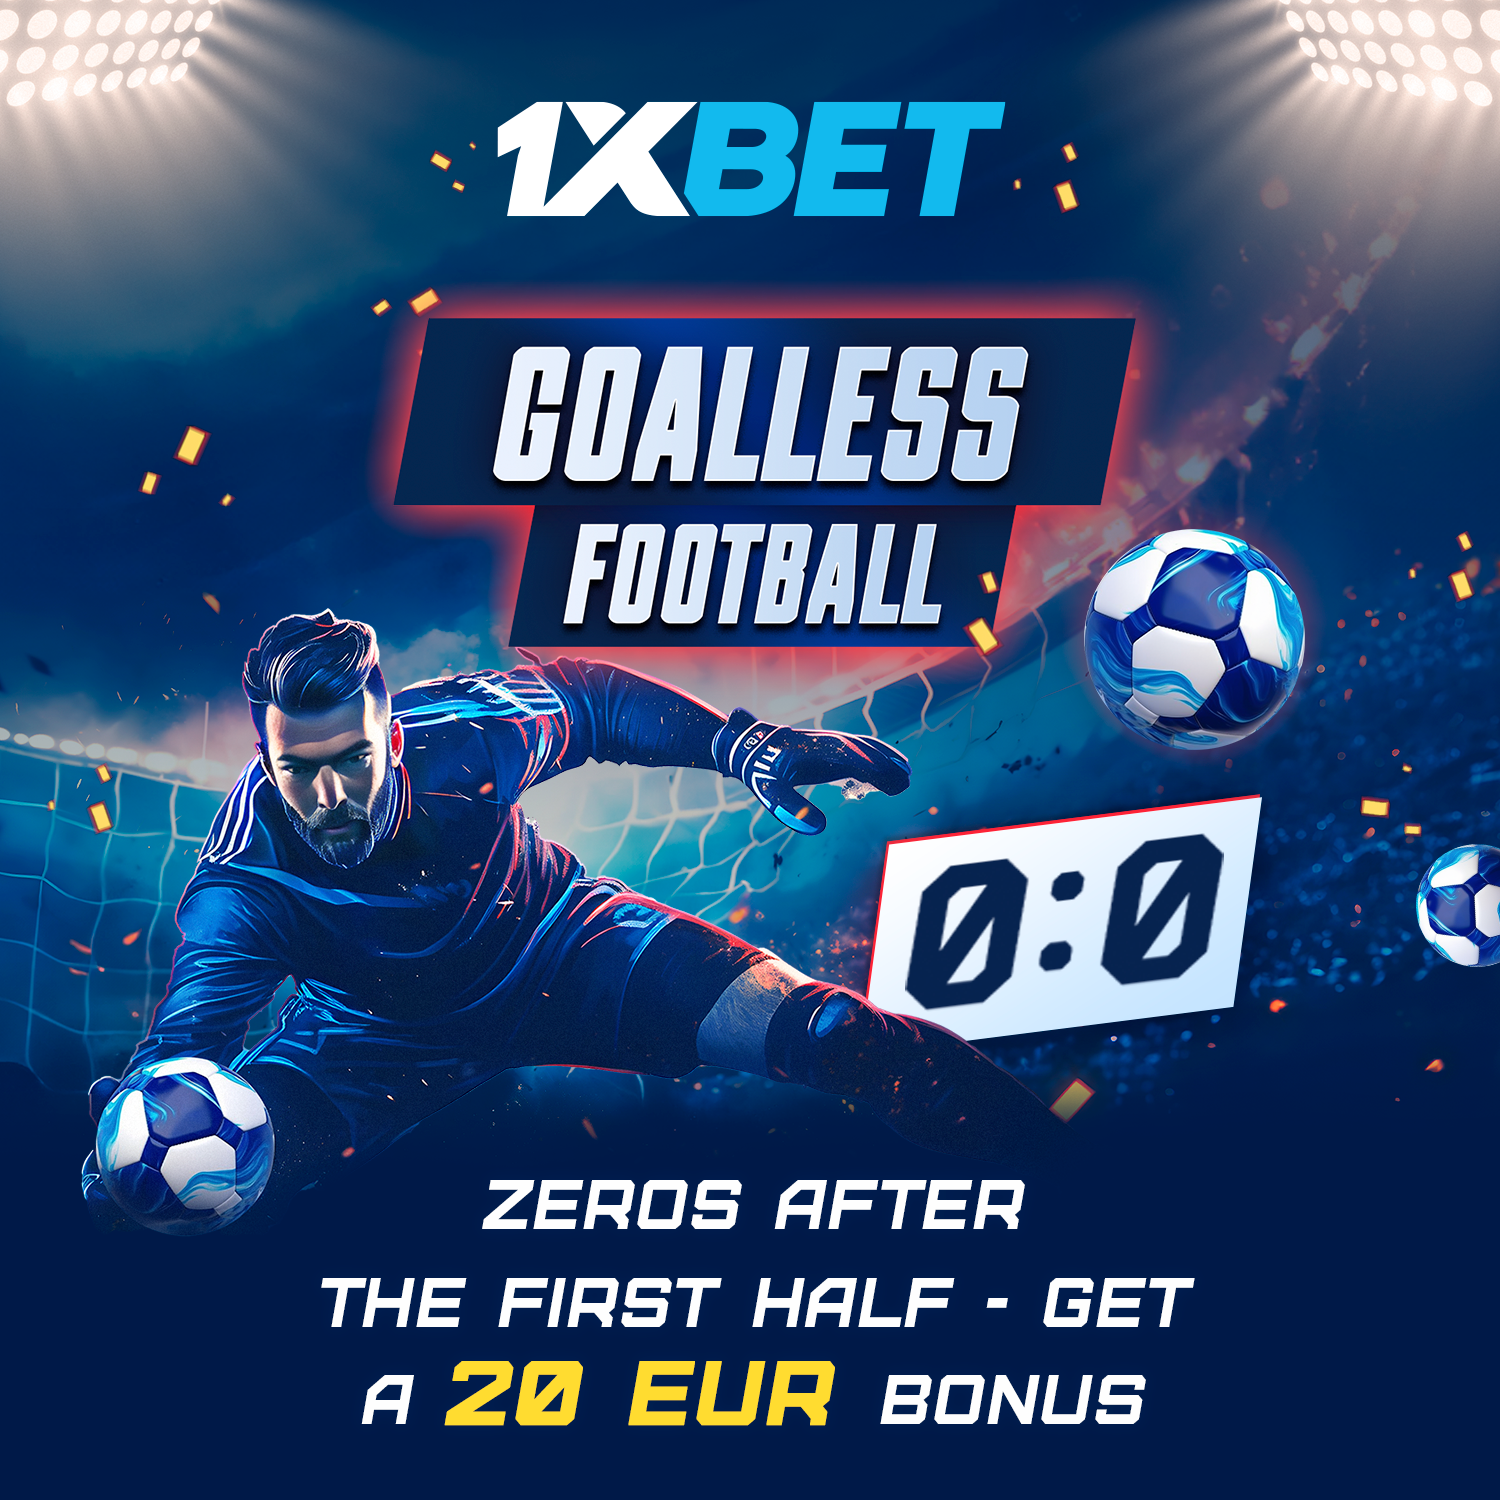 1xBet Goalless Football Bonus up to 20 EUR